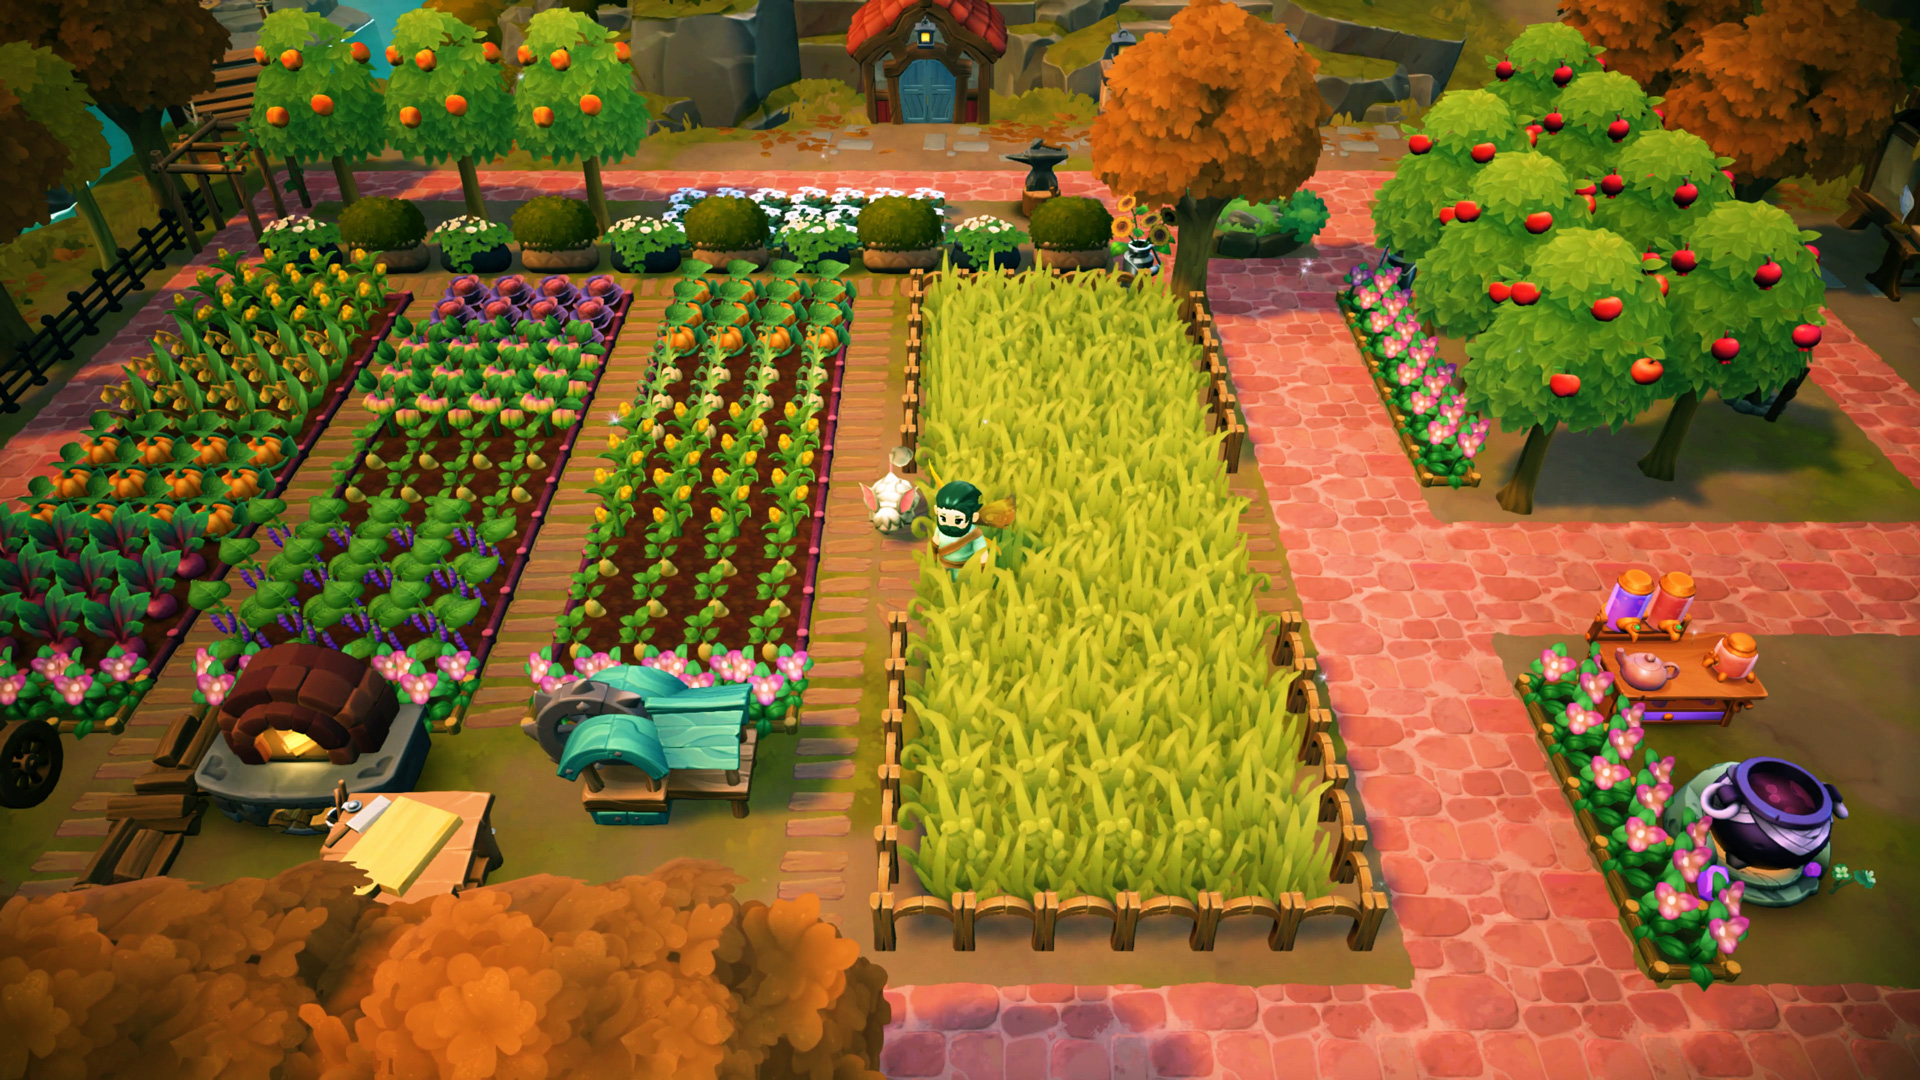 Fae Farm - Un jeu sur Nintendo Switch tout mignon et relaxant - GEEKNPLAY  Home, News, Nintendo Switch